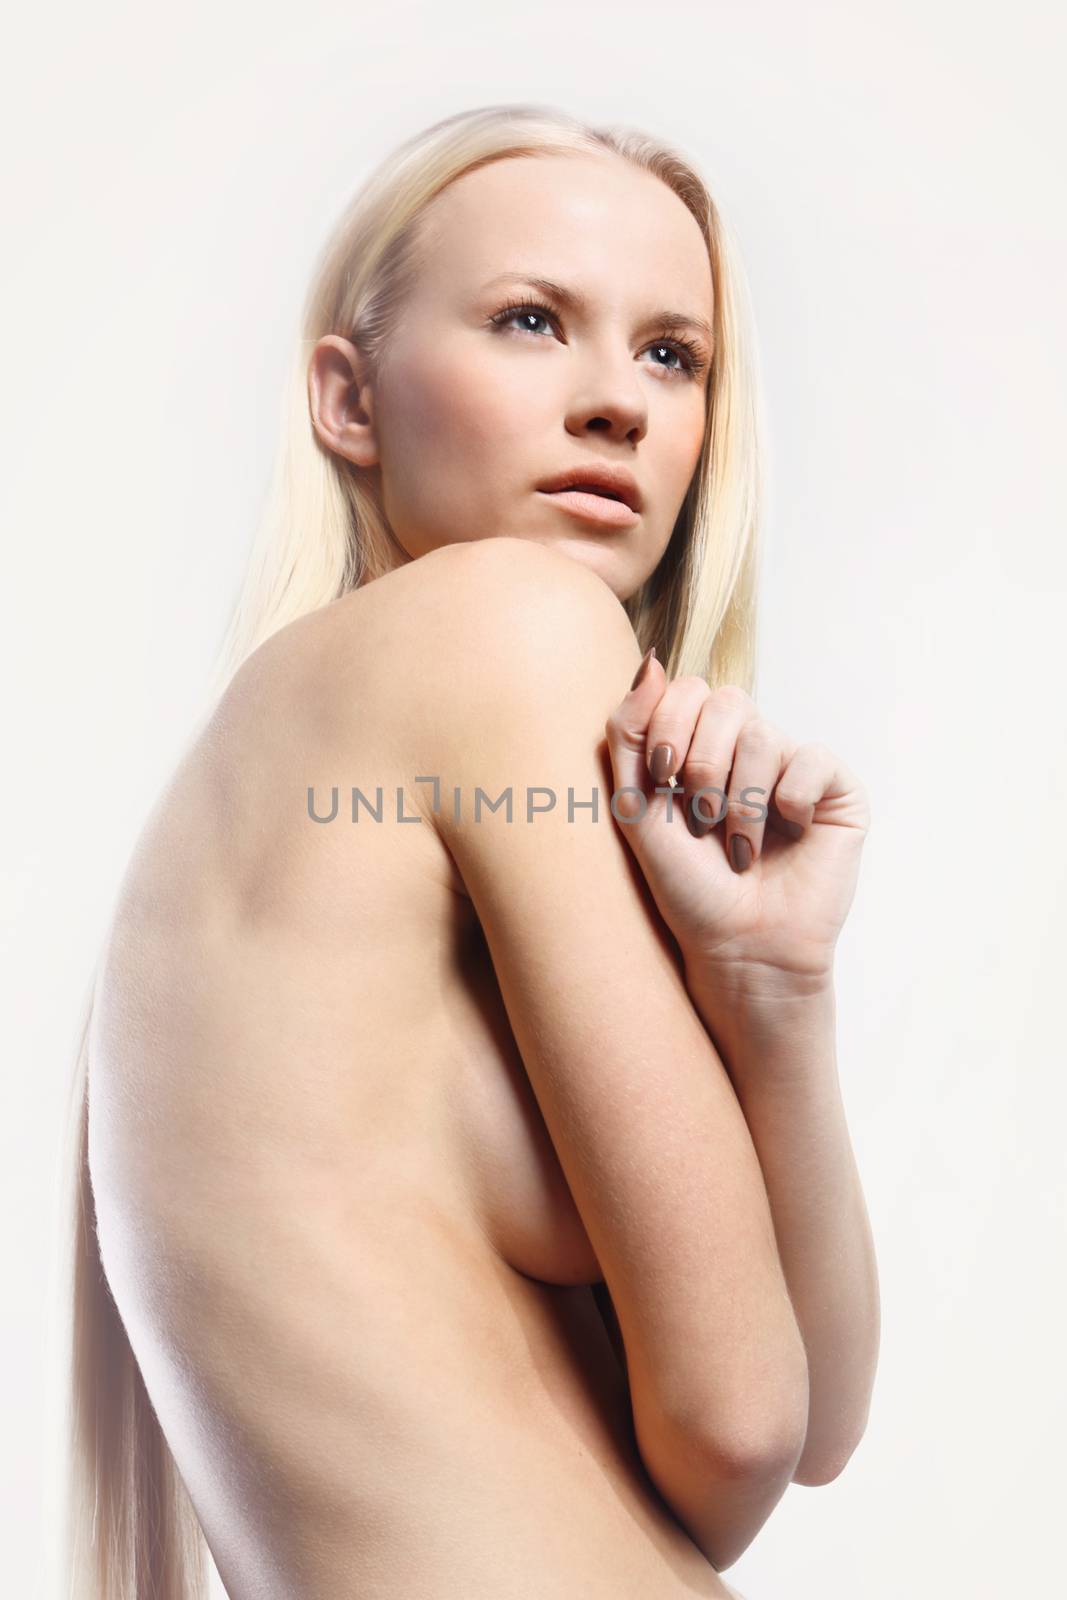 Naked woman by robert_przybysz